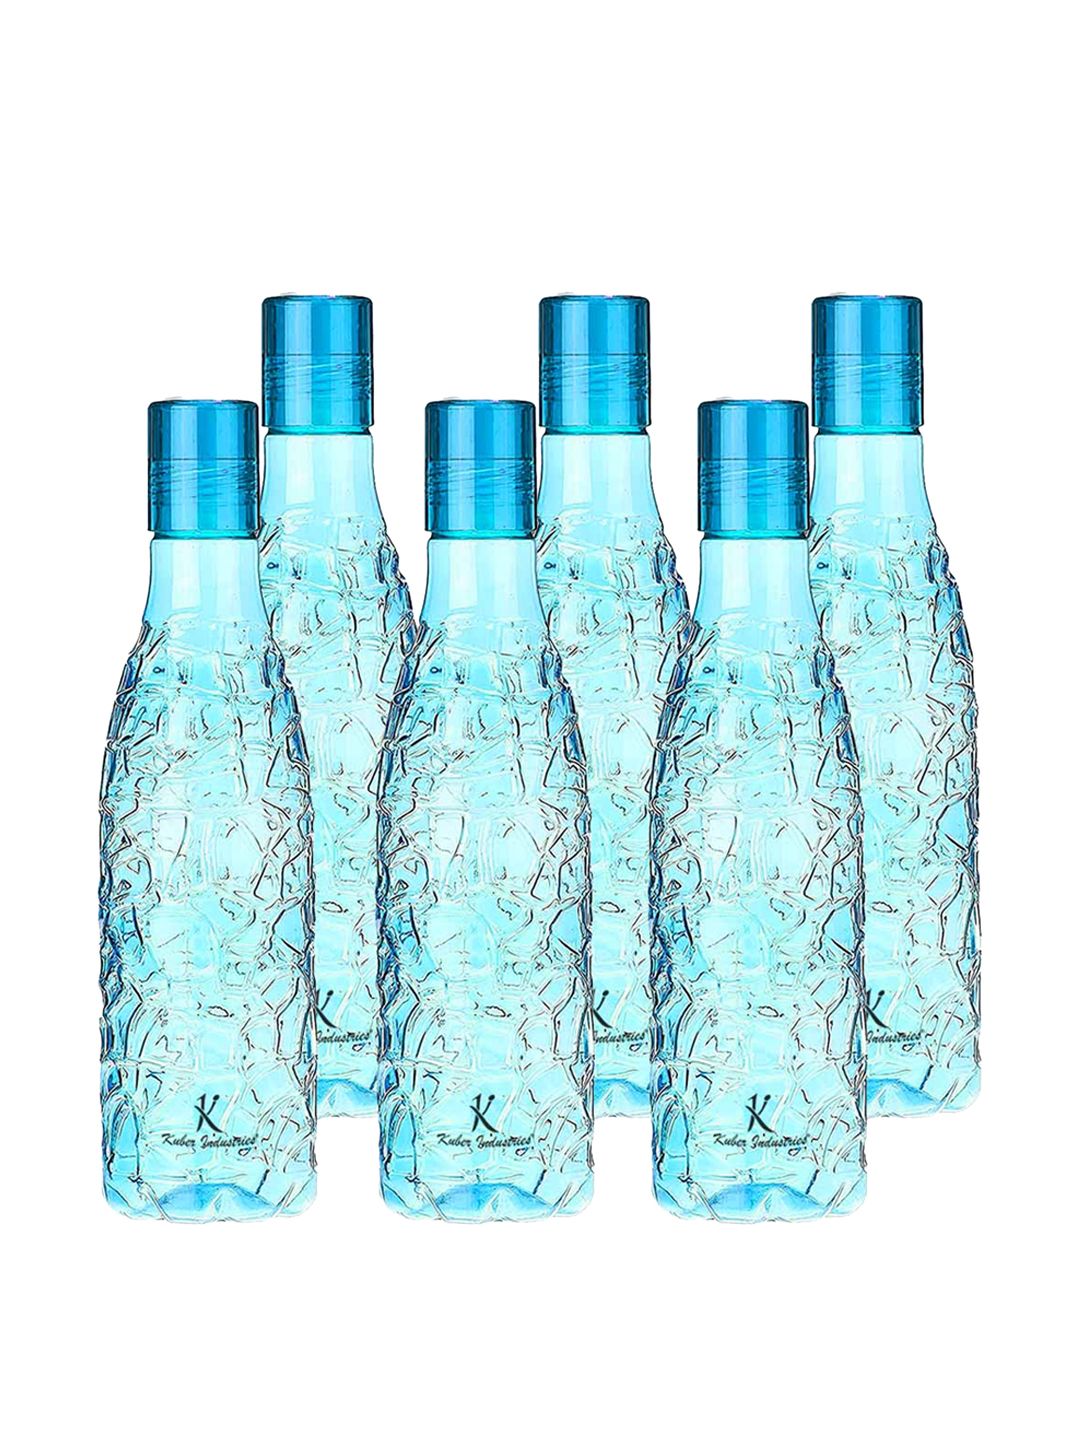 Kuber Industries Set of 6 Blue Leak BPA Free Round Ice Cut Plastic Refrigerator Bottles Price in India